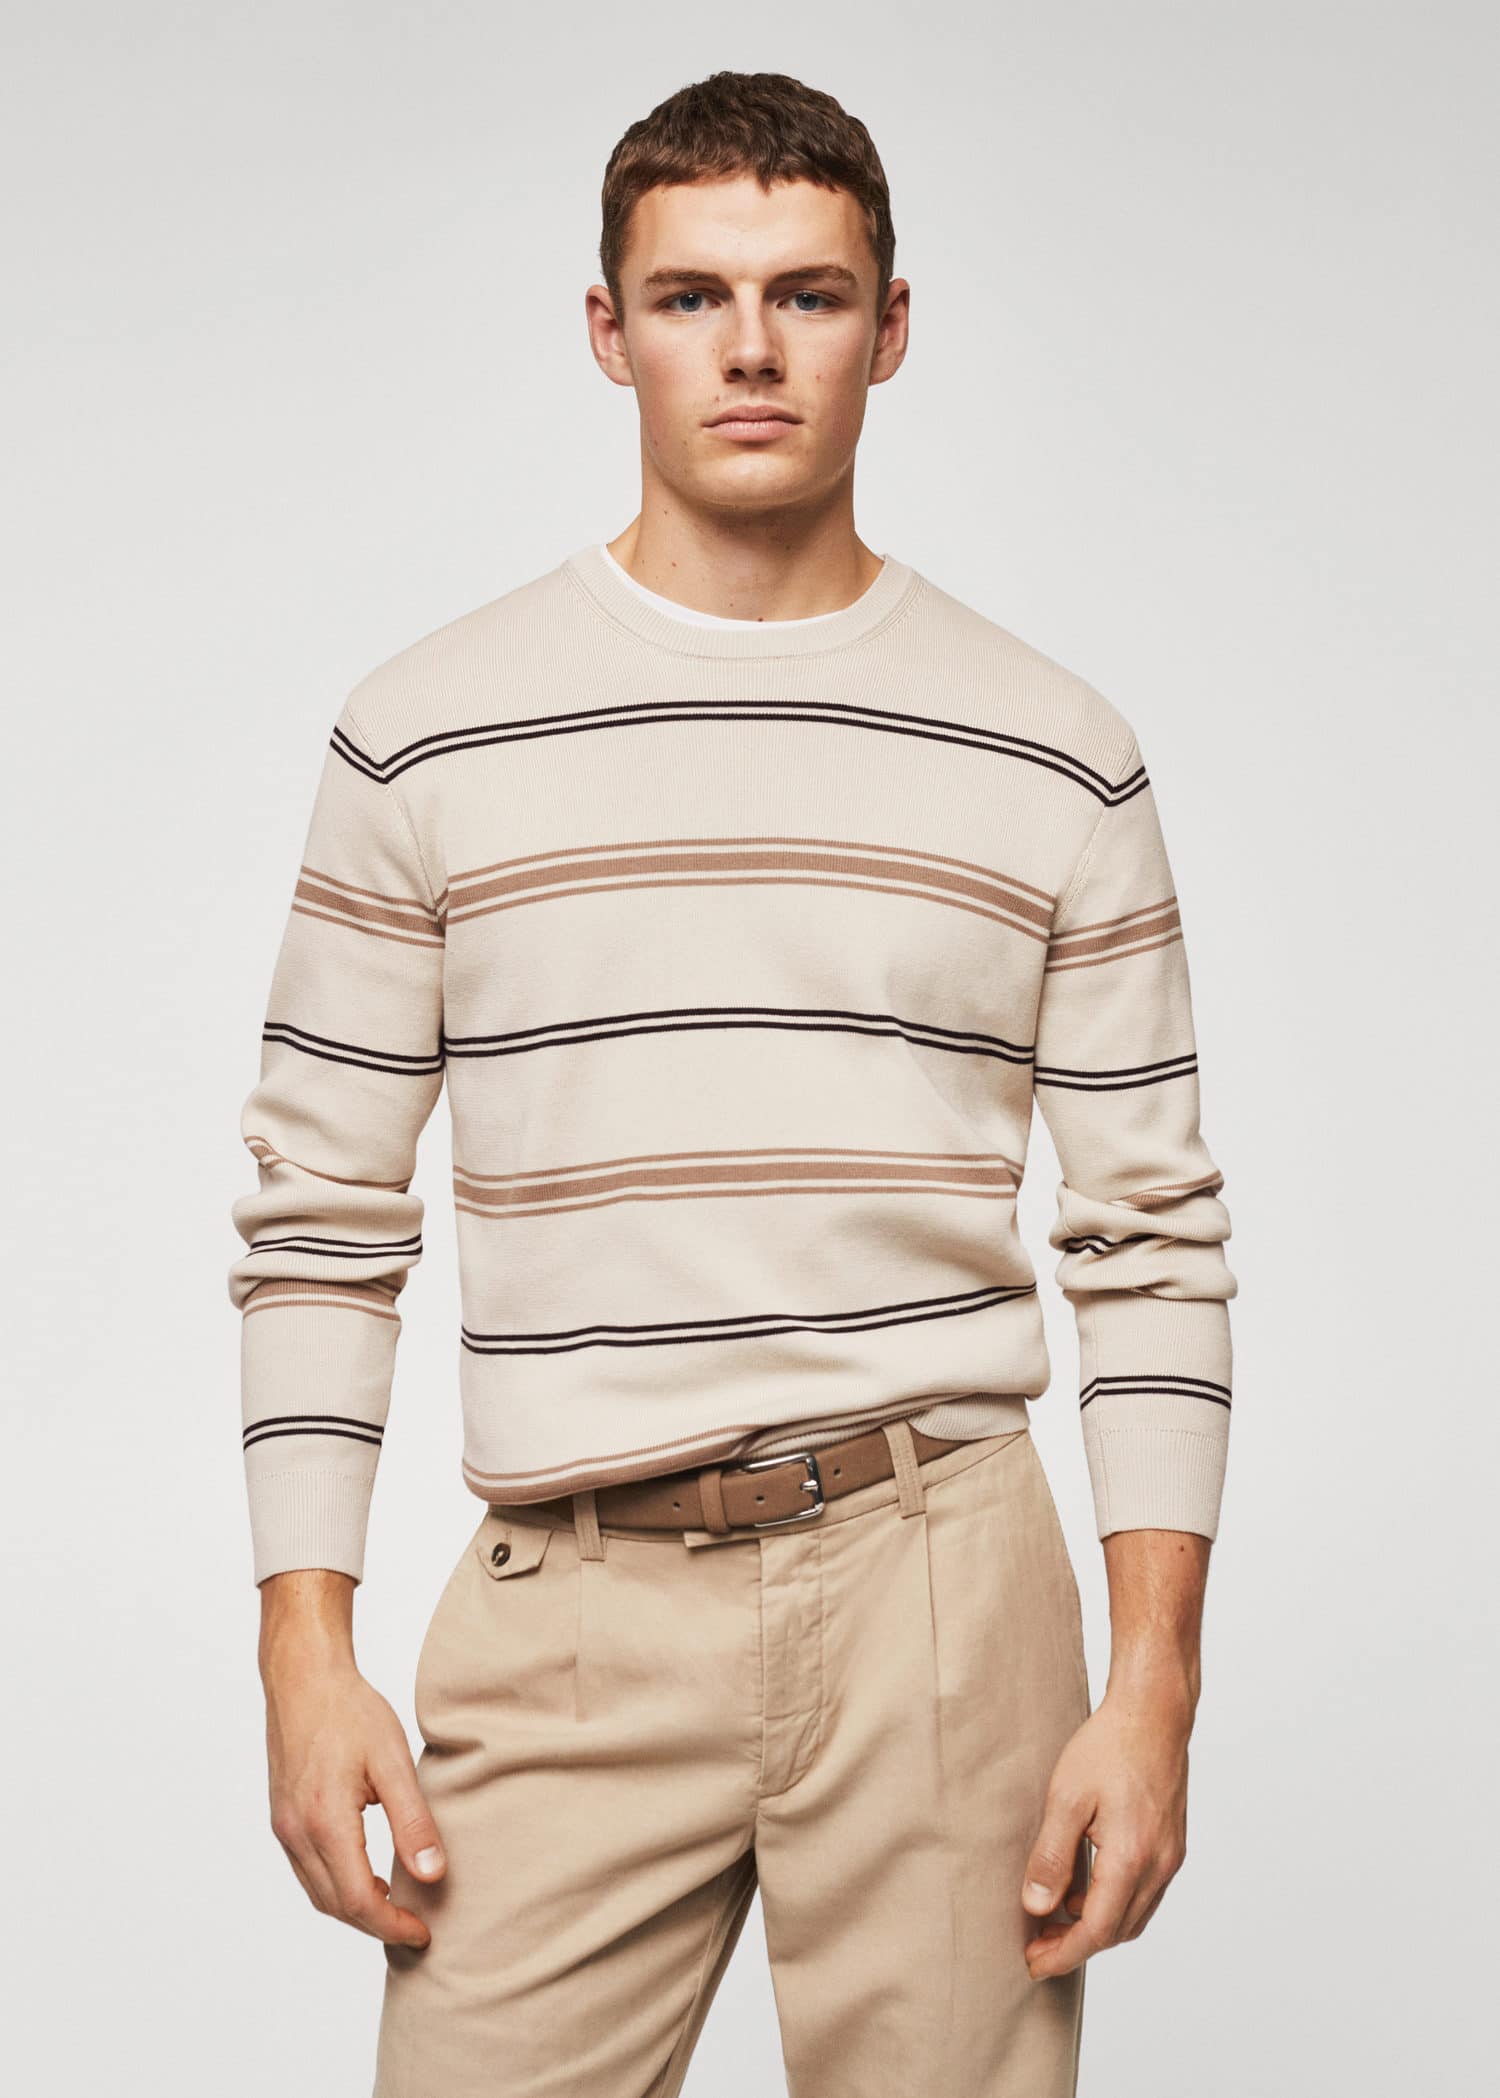 Striped cotton sweater - Medium plane